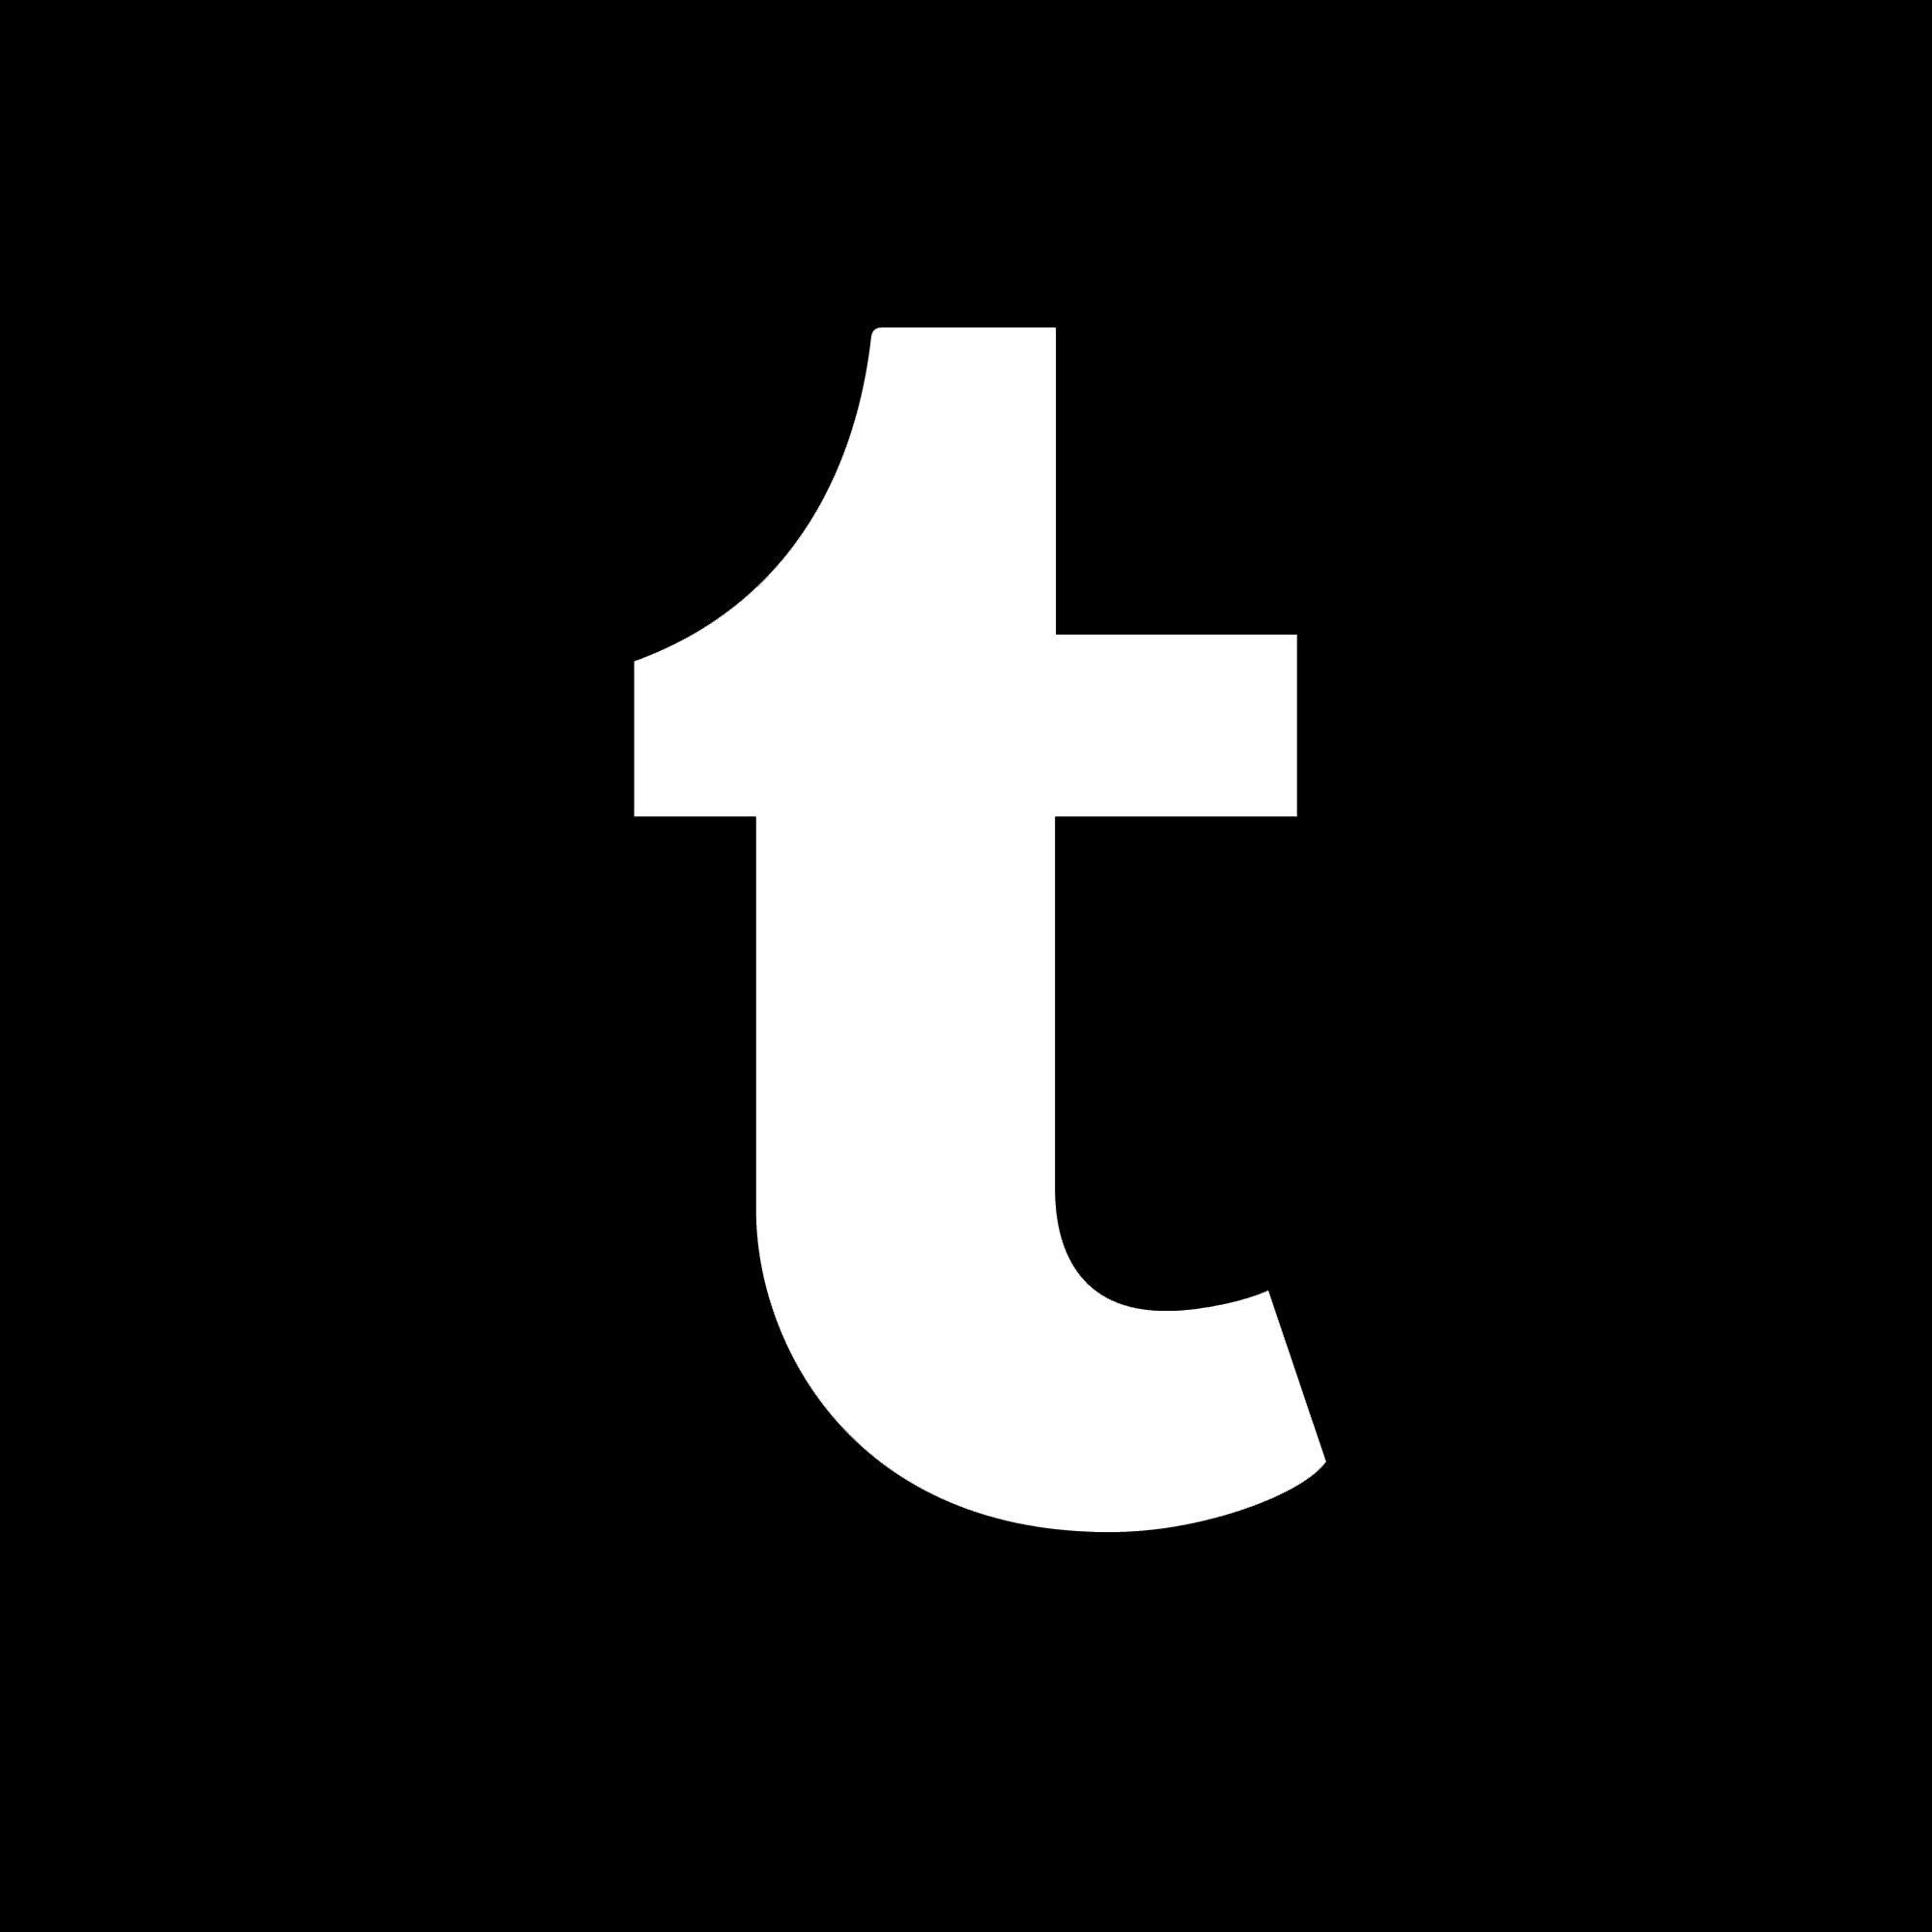 Tumblr Logo - Tumblr Logo, Tumblr Symbol, Meaning, History and Evolution